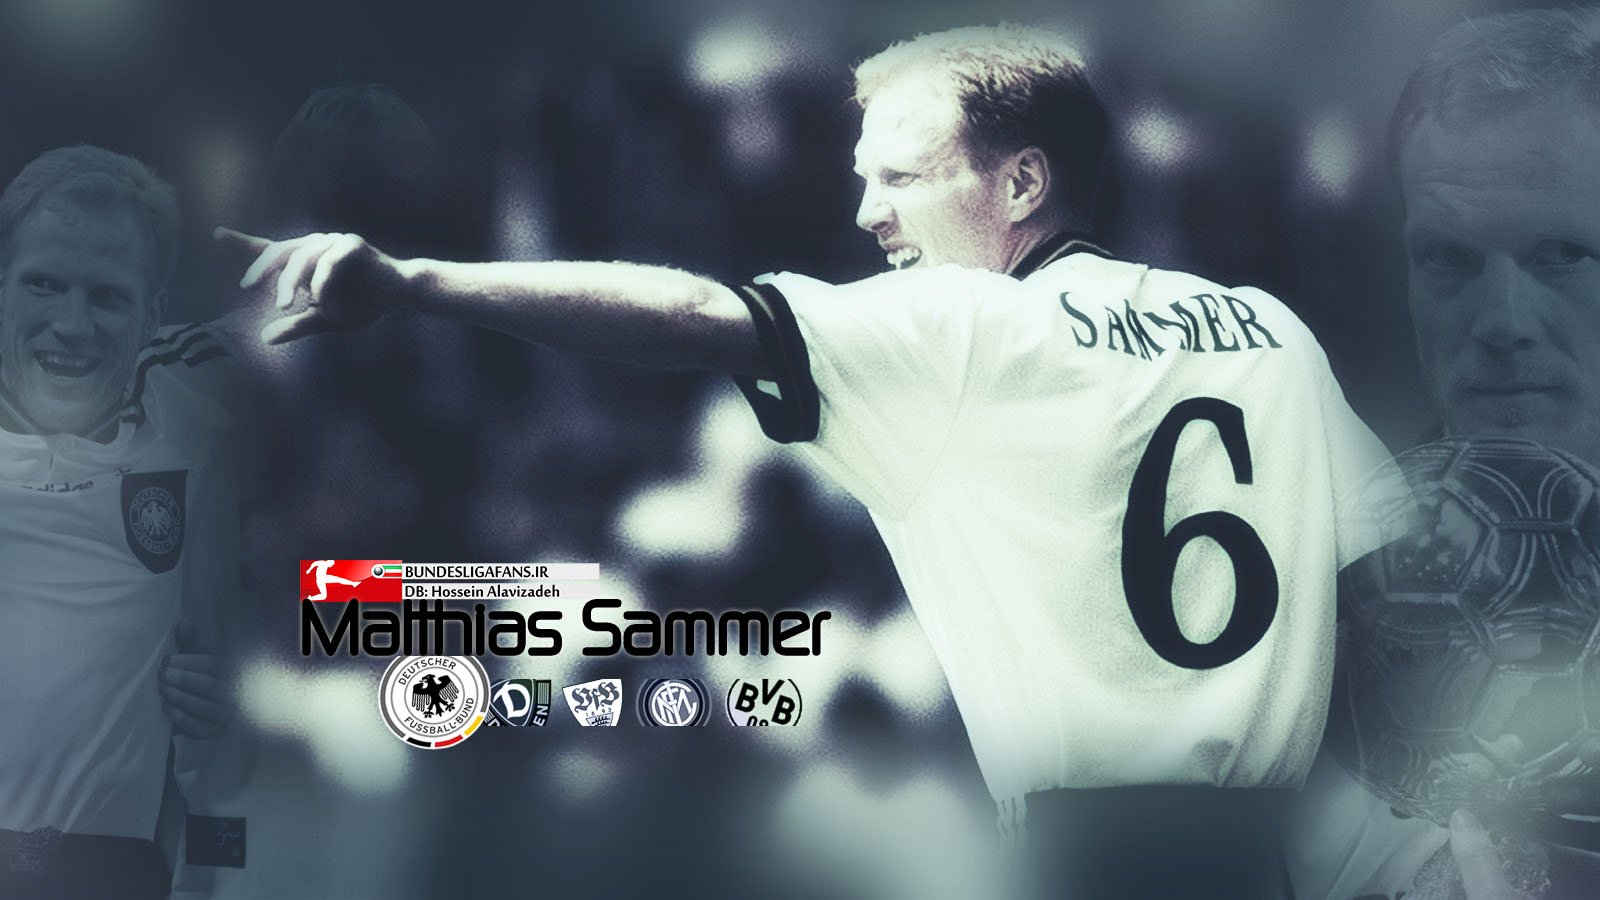 Fussball90: Matthias Sammer, The last German Ballon d'Or winner #MatthiasSammer #Wallpaper